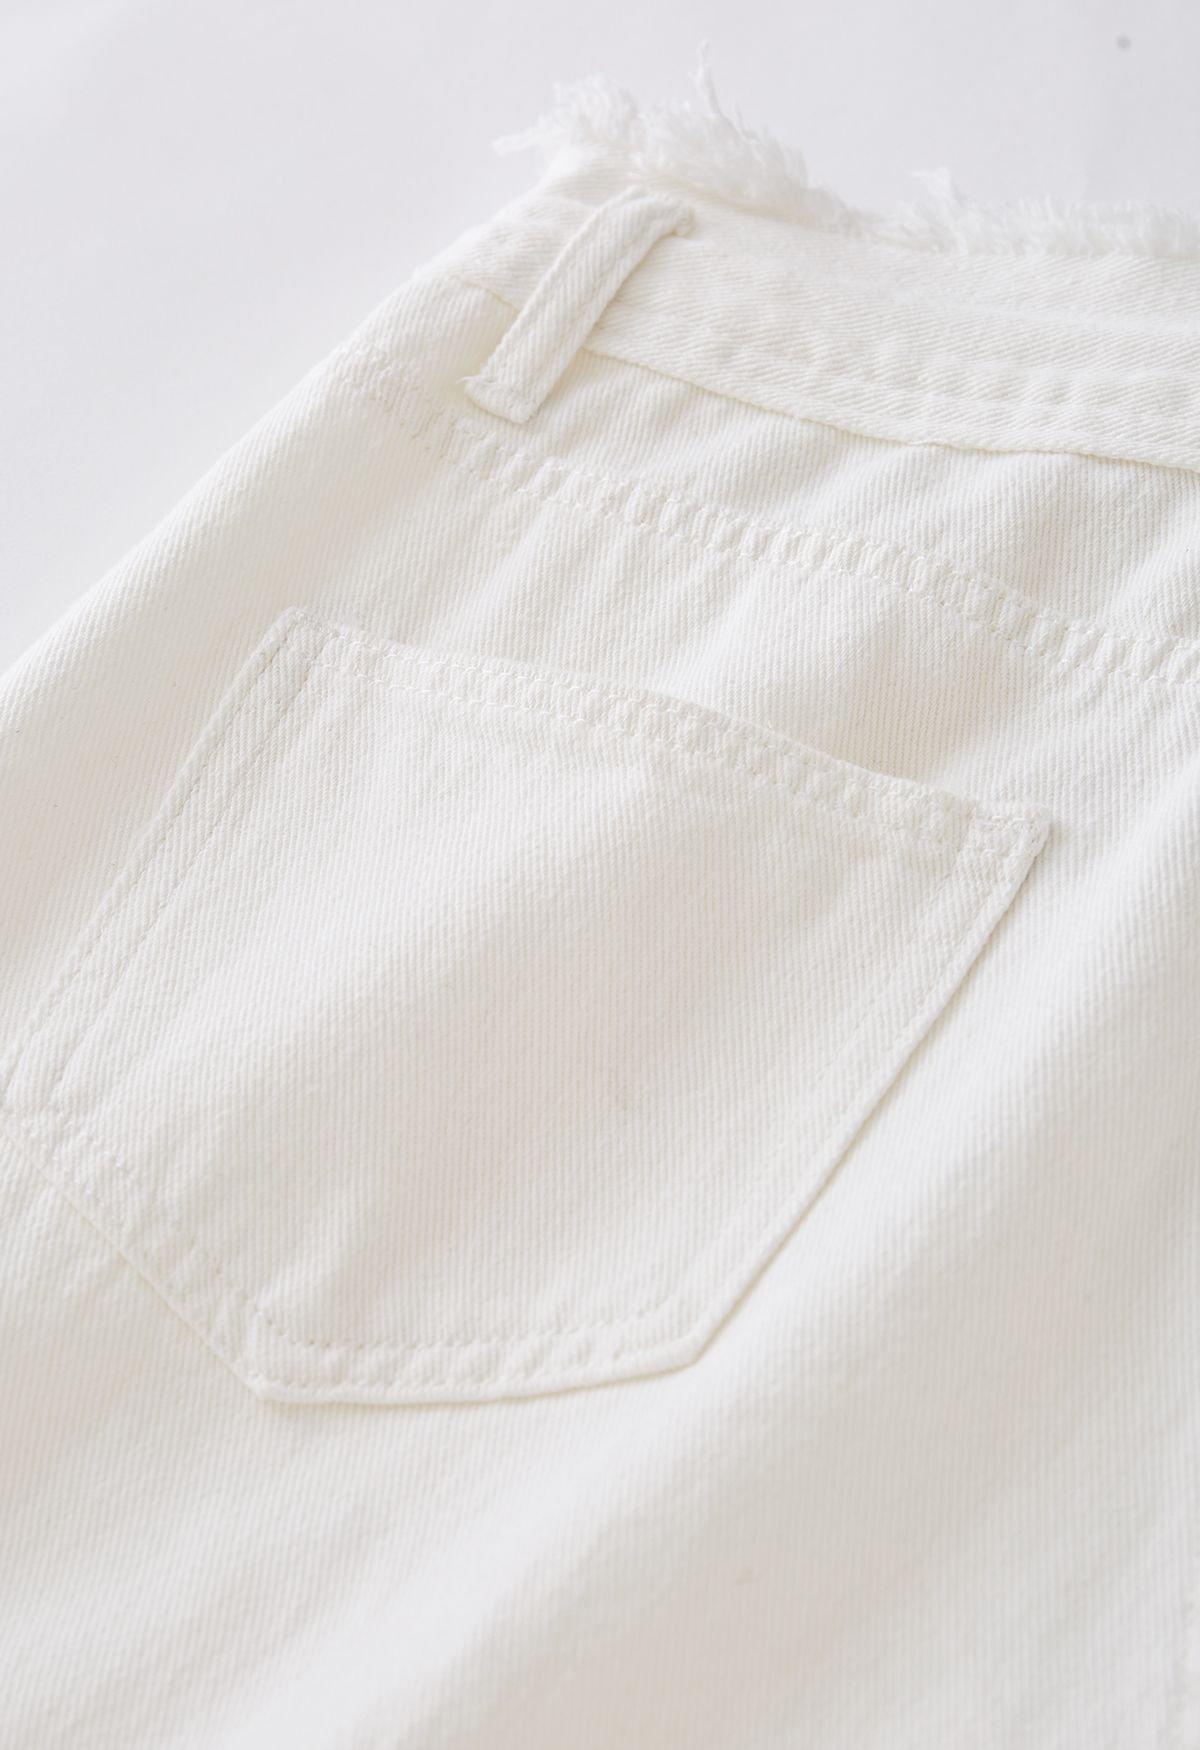 Drawstring Frayed Waist White Jeans